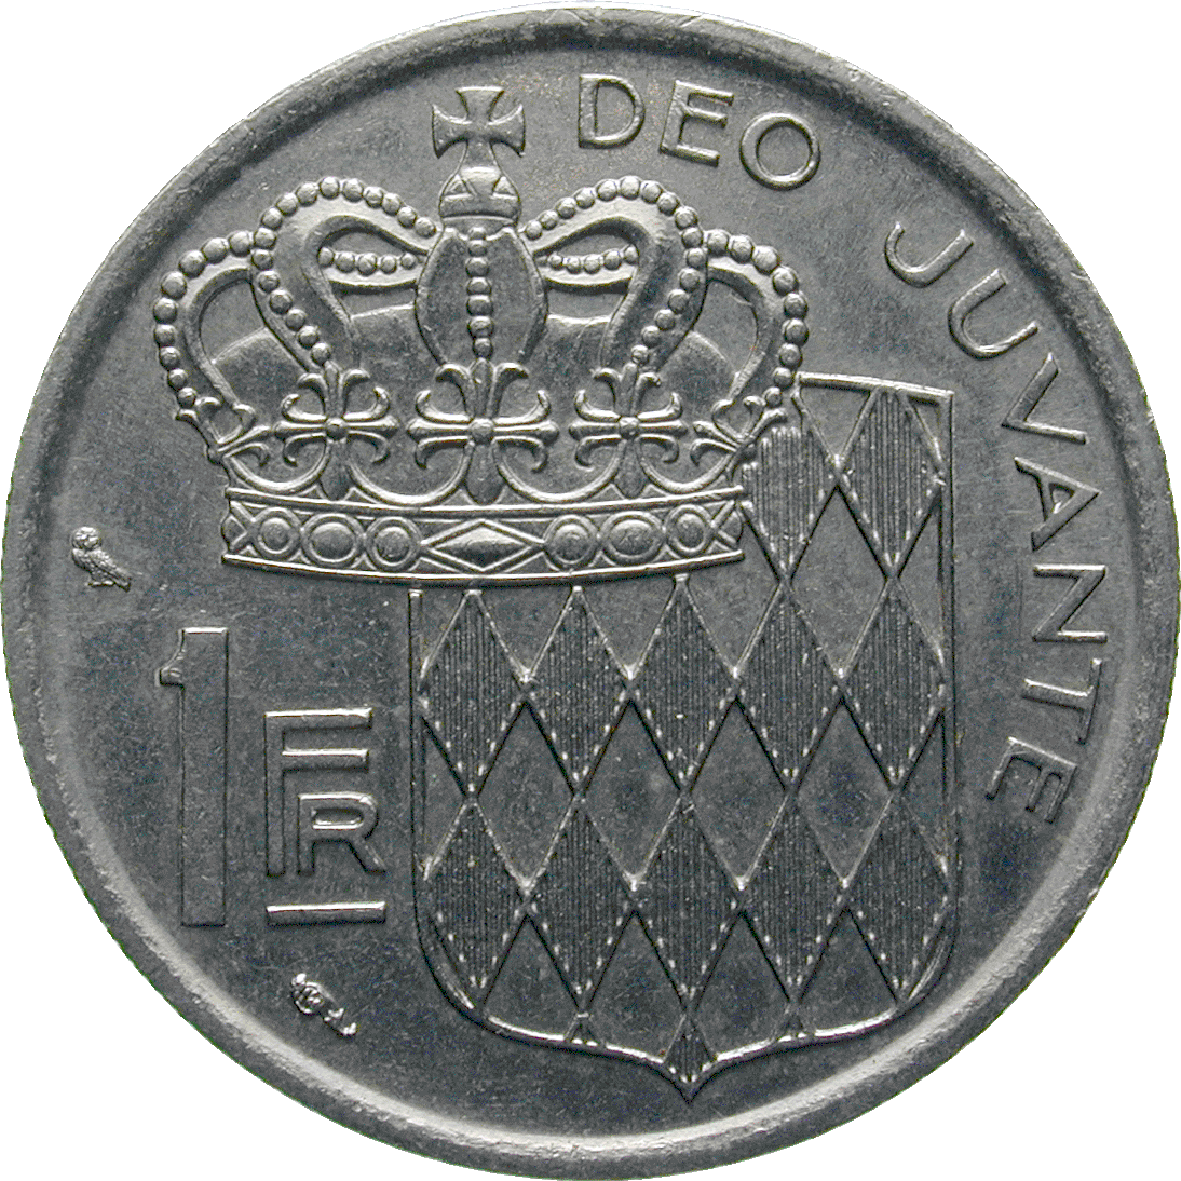 Principality of Monaco, Rainer III, 1 Franc 1968 (reverse)